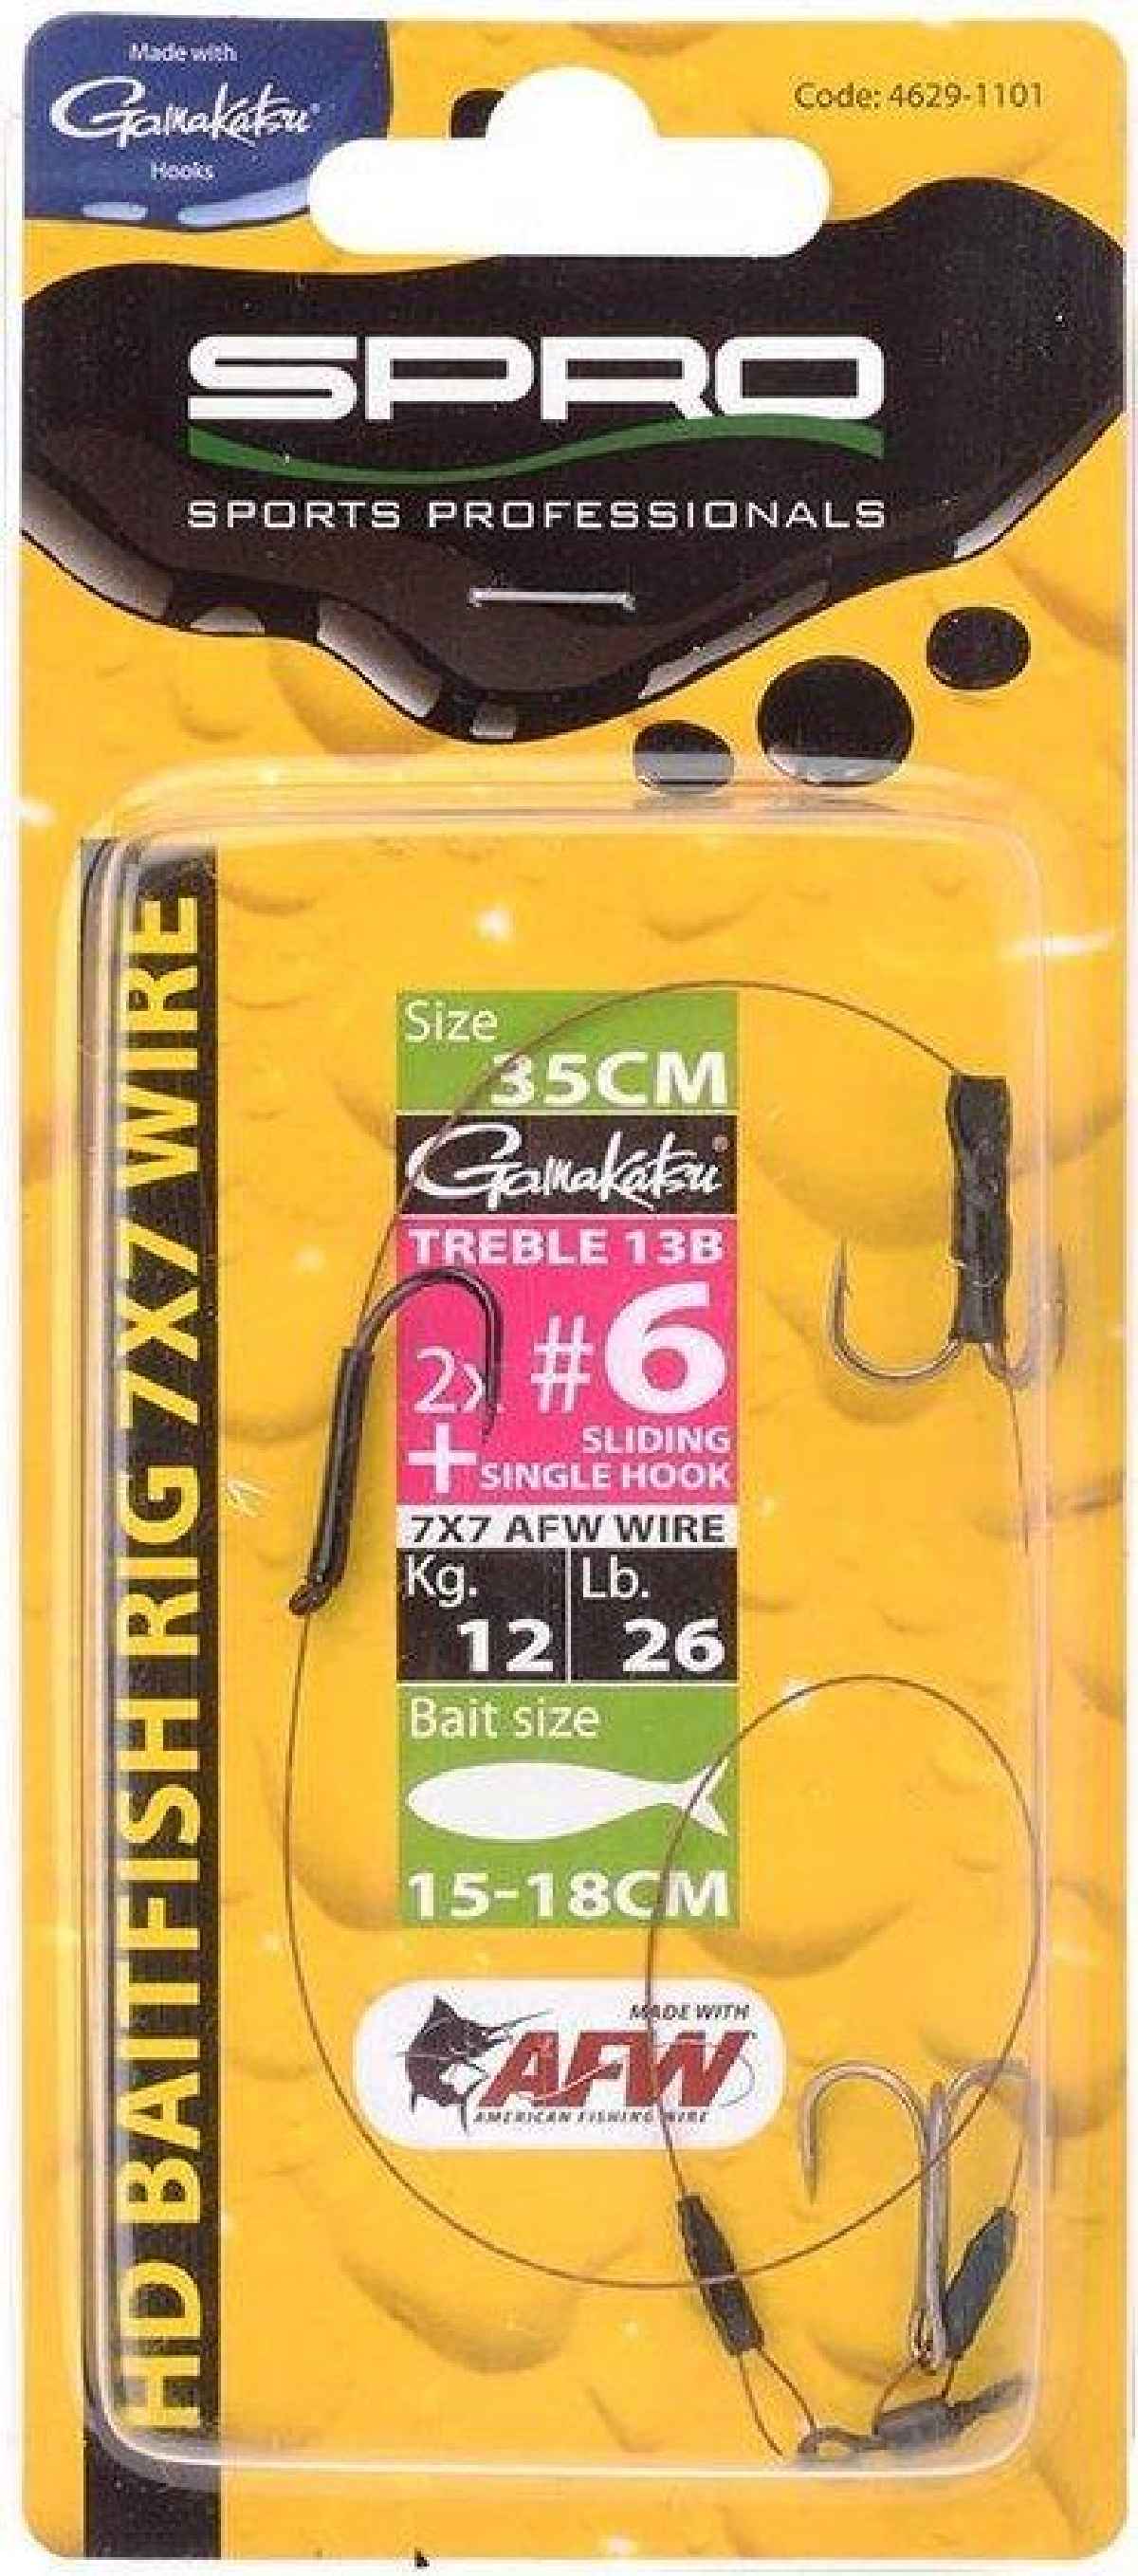 Spro Hd Baitfish Rig 2X Treble 1X Single Hook 18Kg 45cm 2x Treble Size 4 + Singlehook